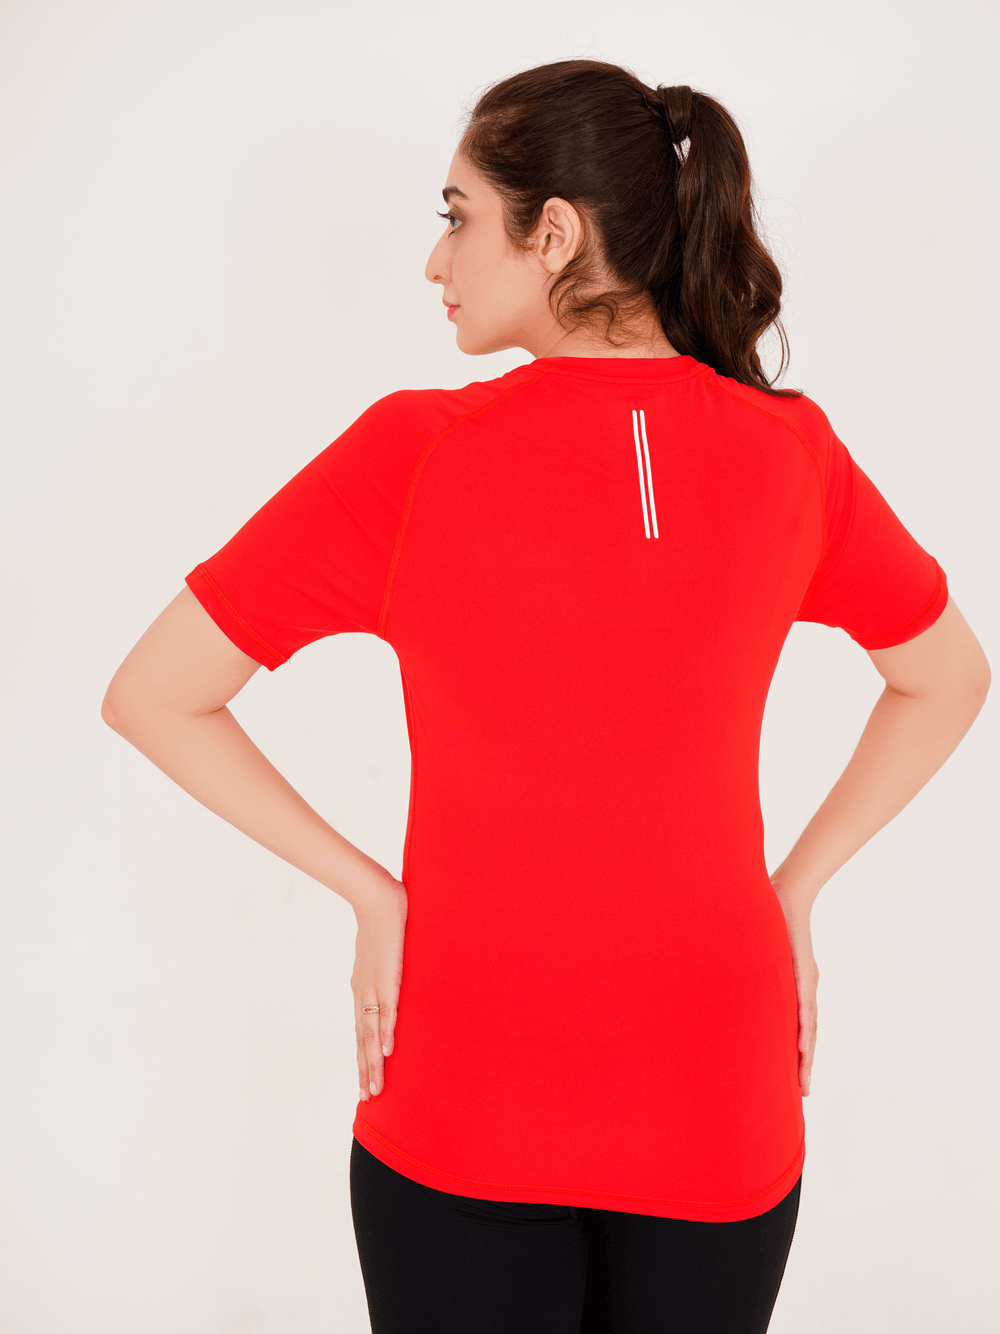 Seamless Dry-Fit Shirt - Red - GYMRUN Activewear